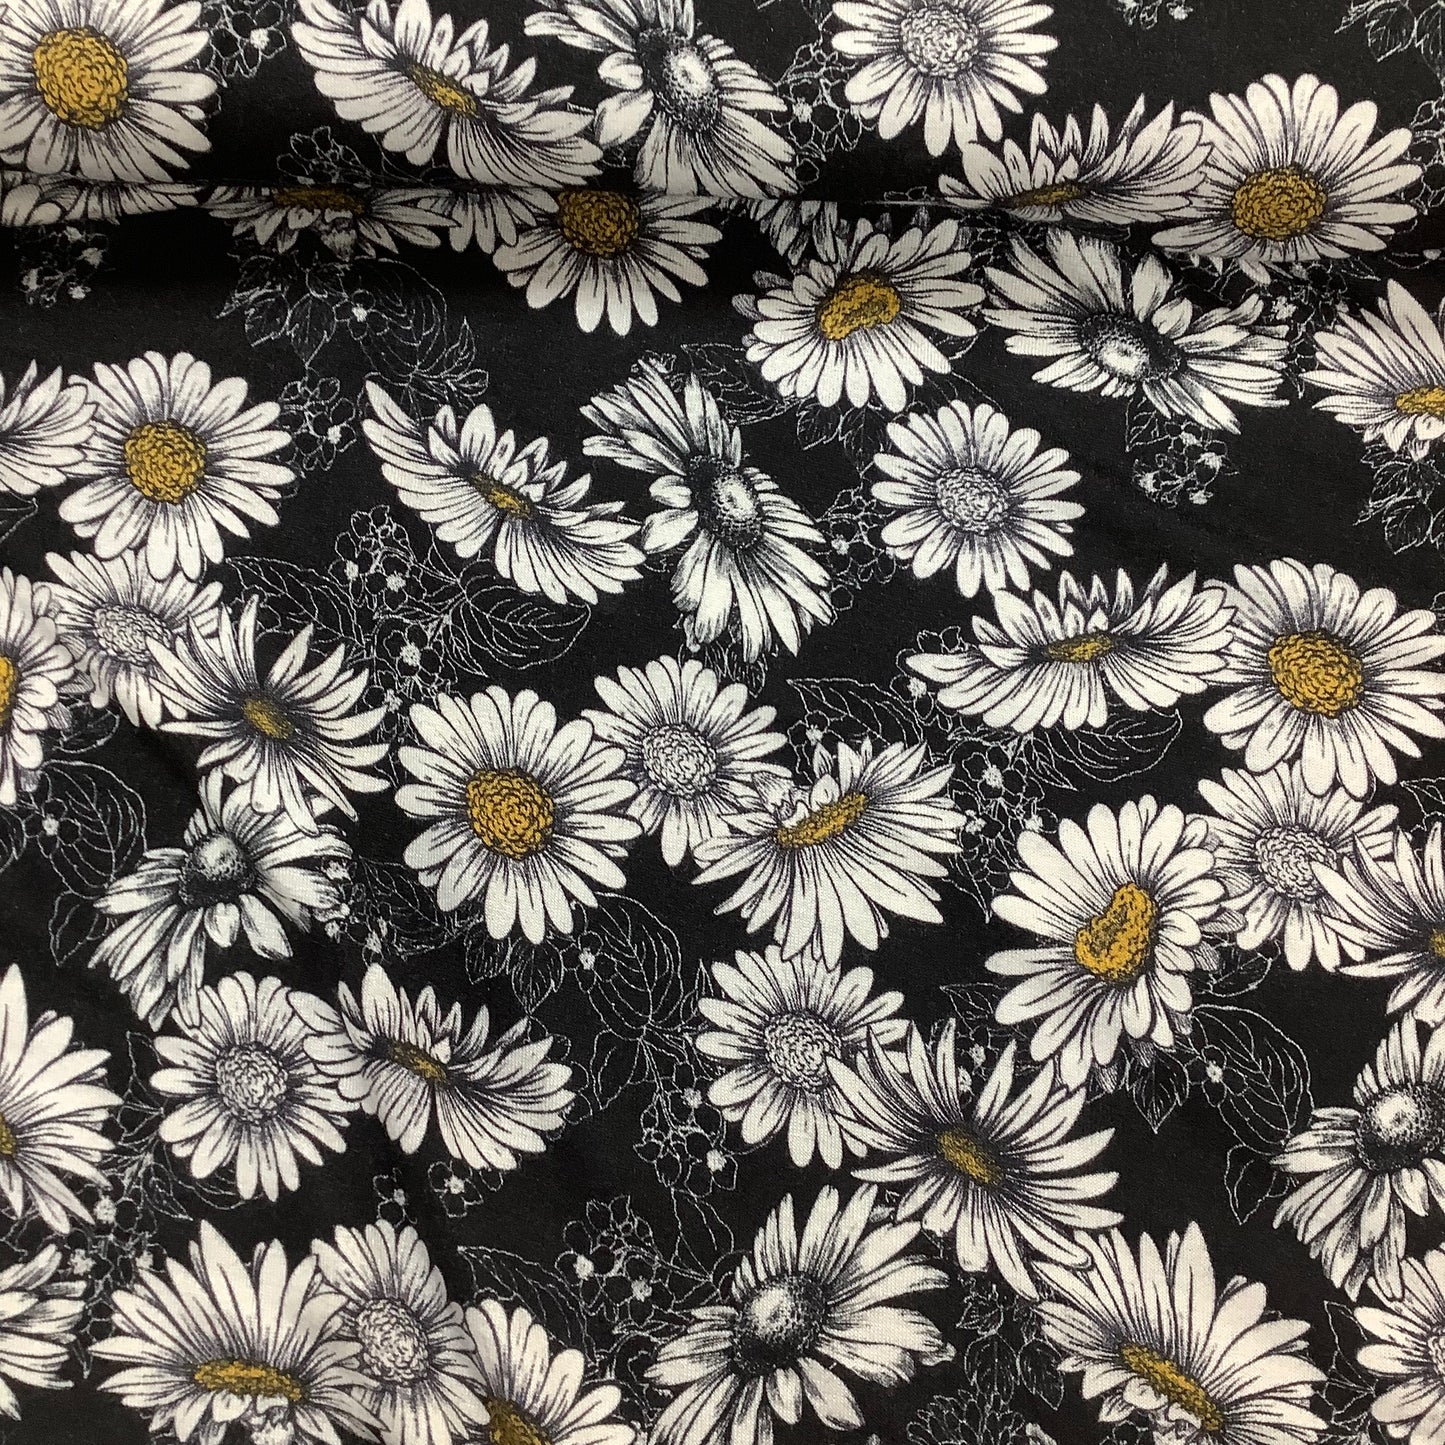 Lightweight Black Daisy Print Stretch Jersey Fabric 95% Viscose 5% Lycra Dressmaking